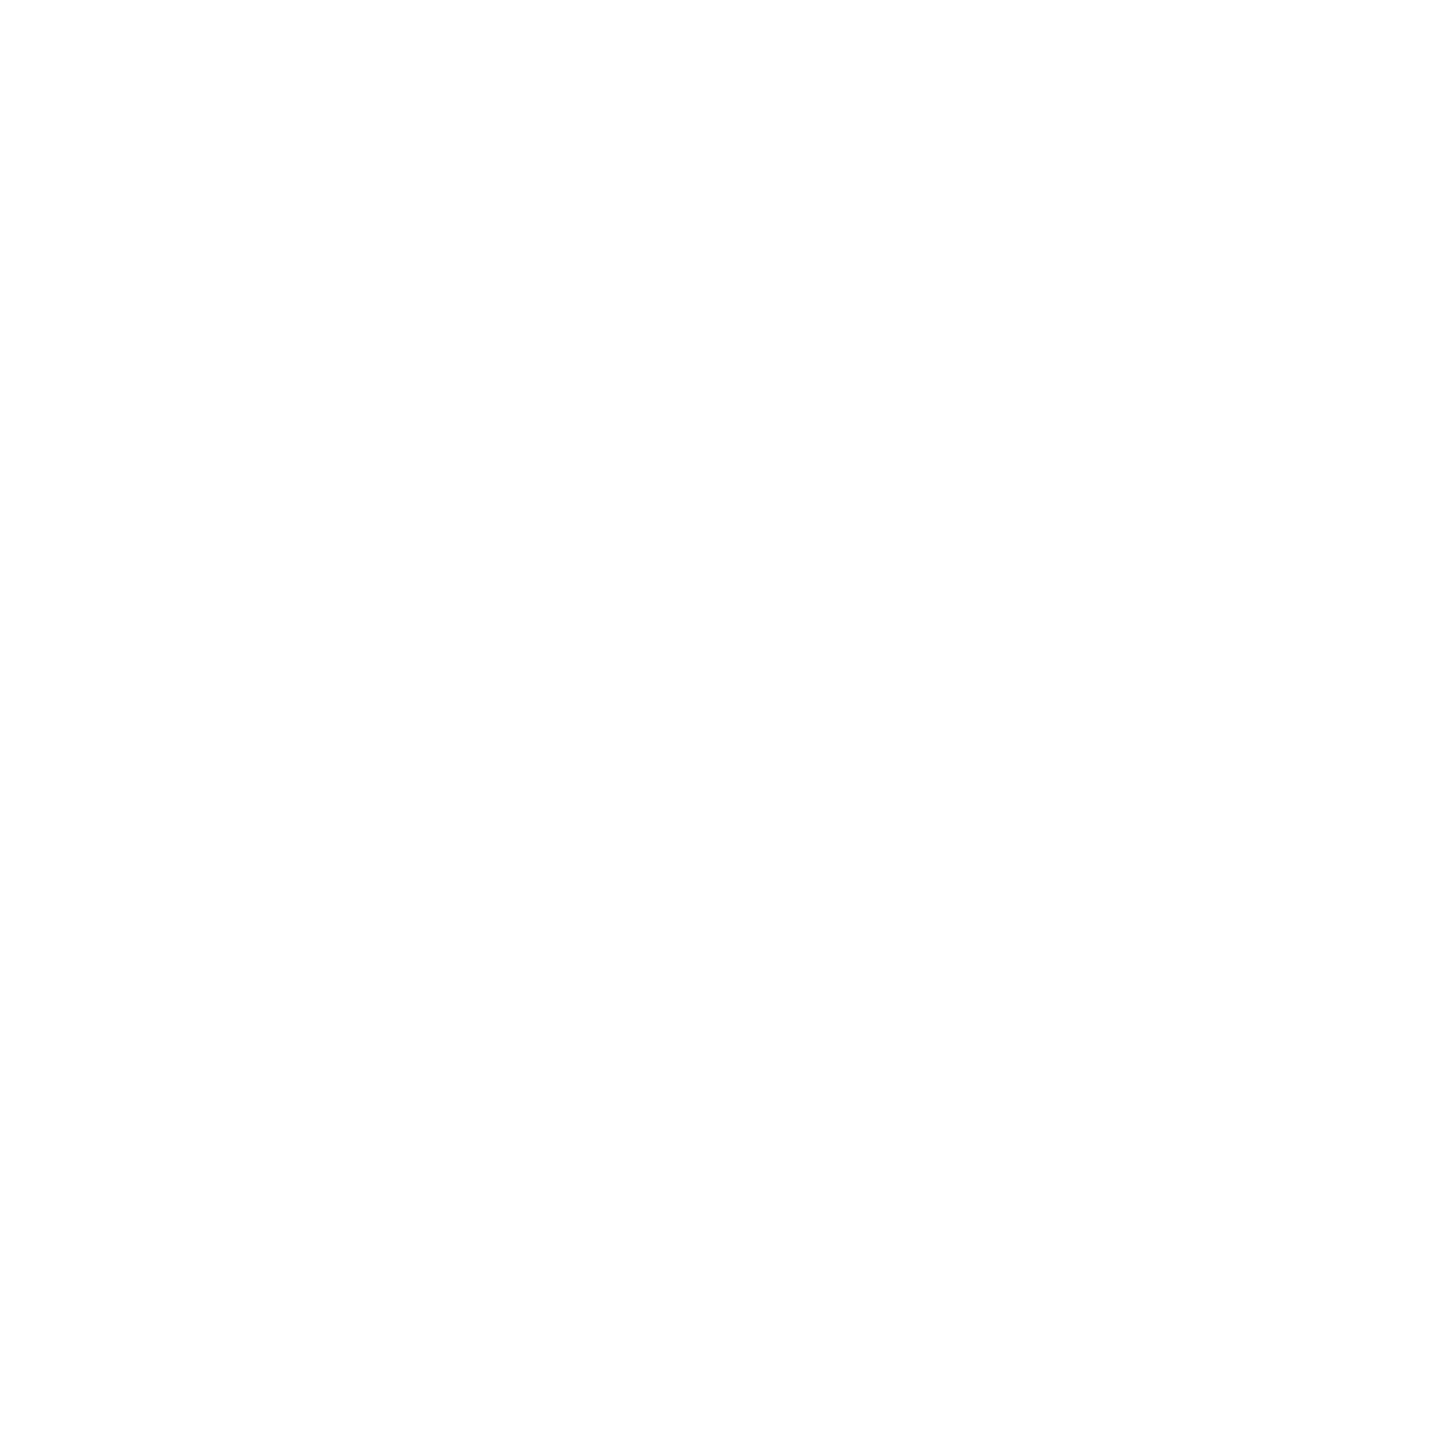 OLX video.